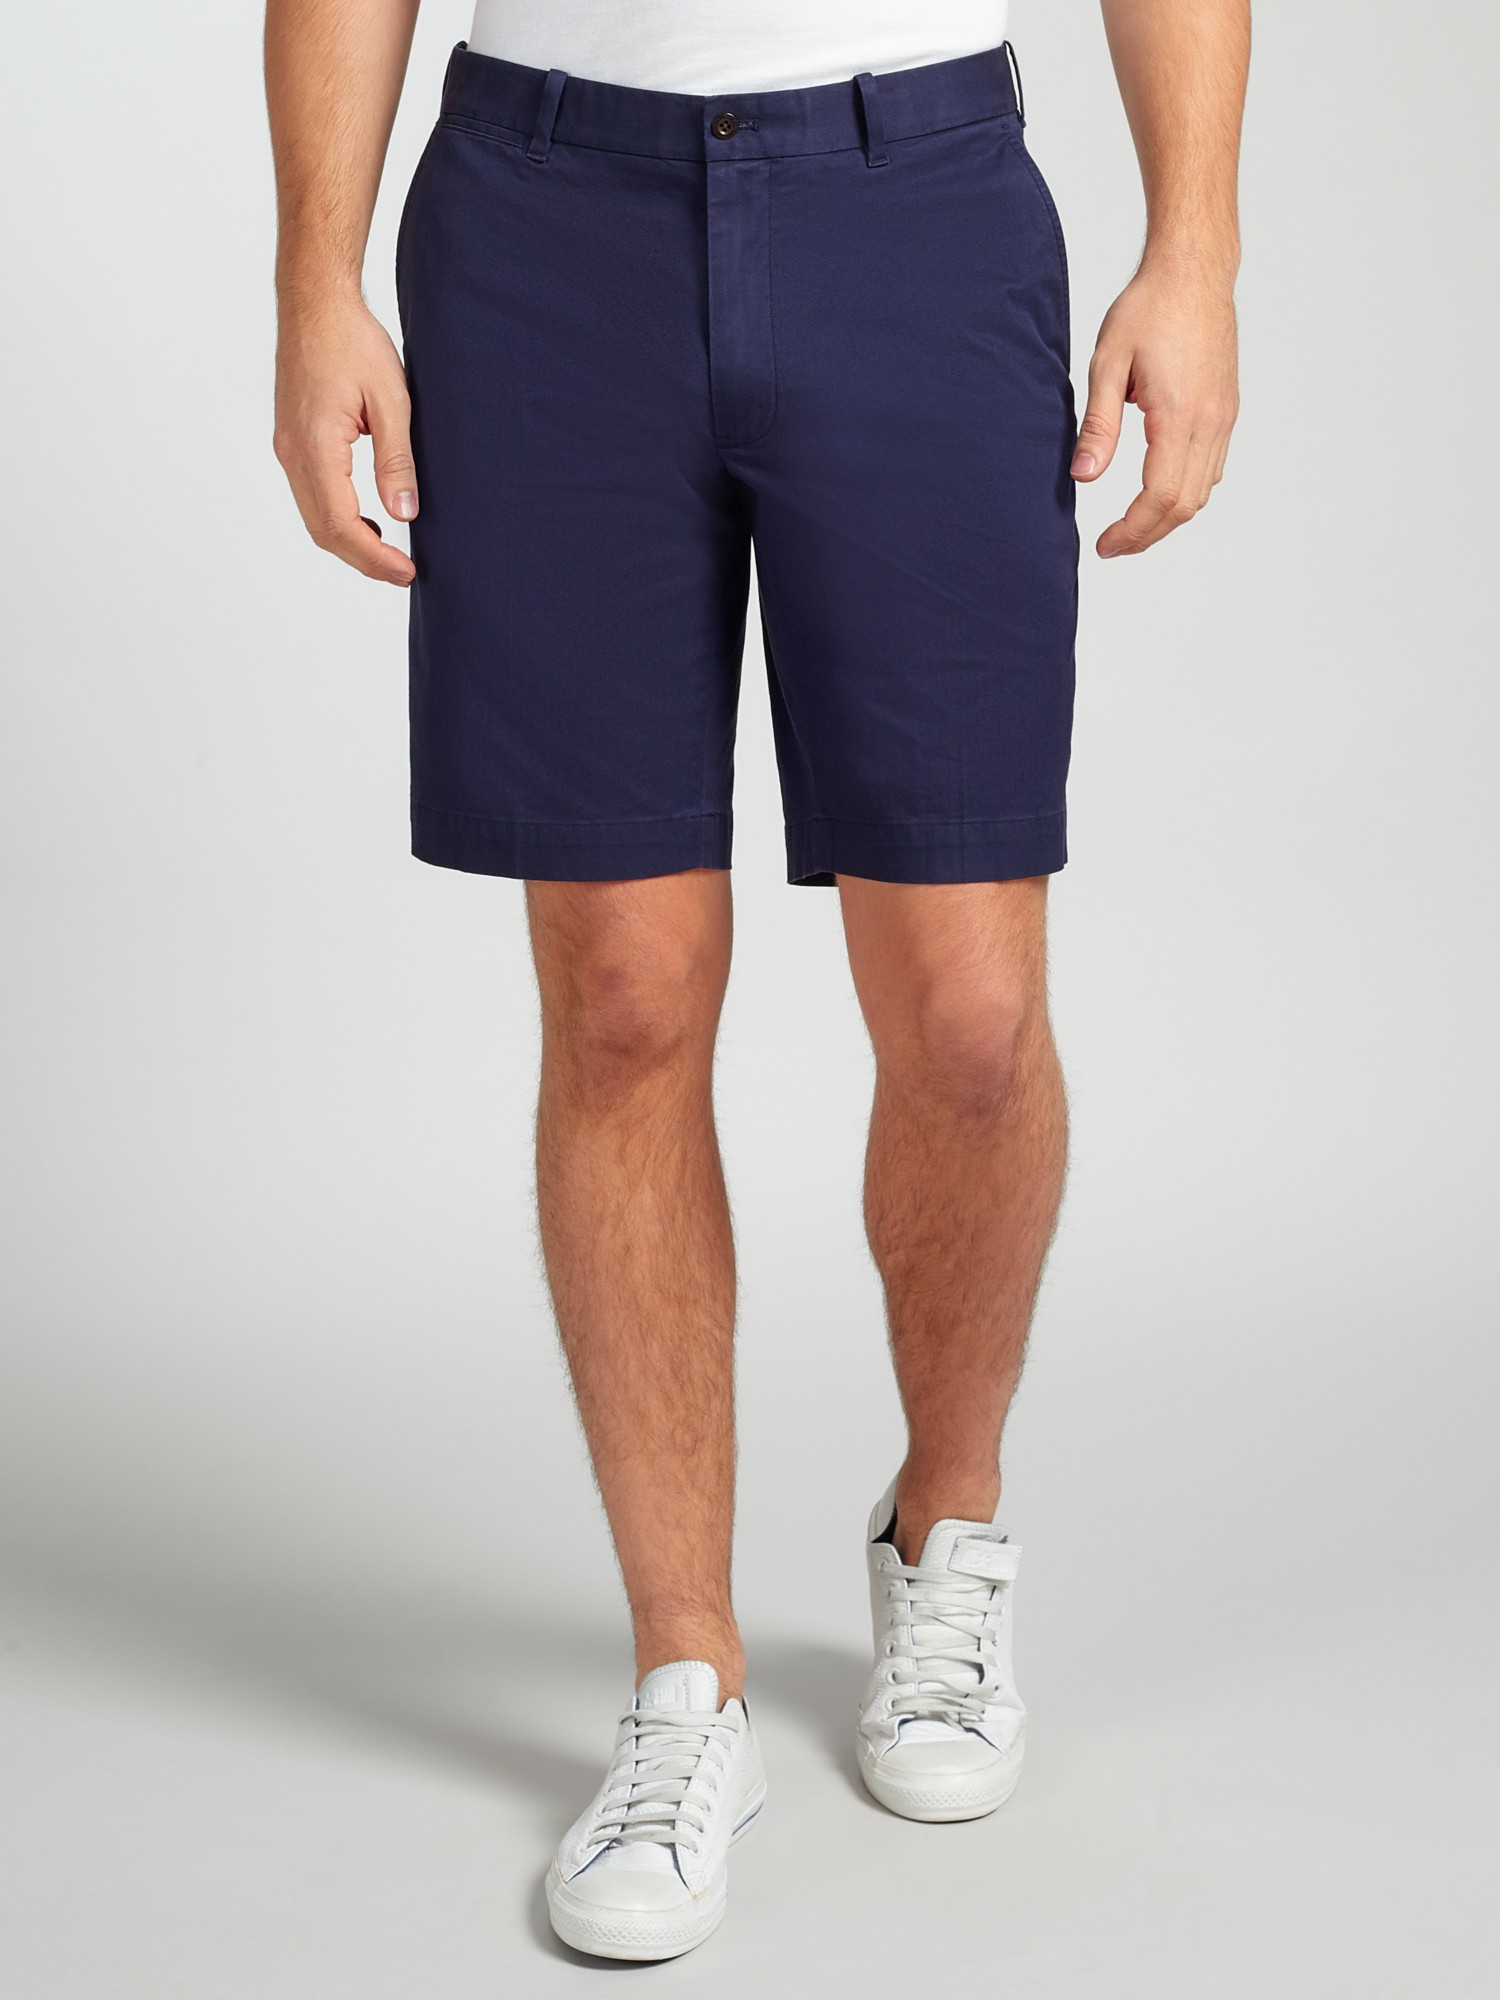 Polo Ralph Lauren Cotton Range Shorts in French Navy (Blue) for Men - Lyst